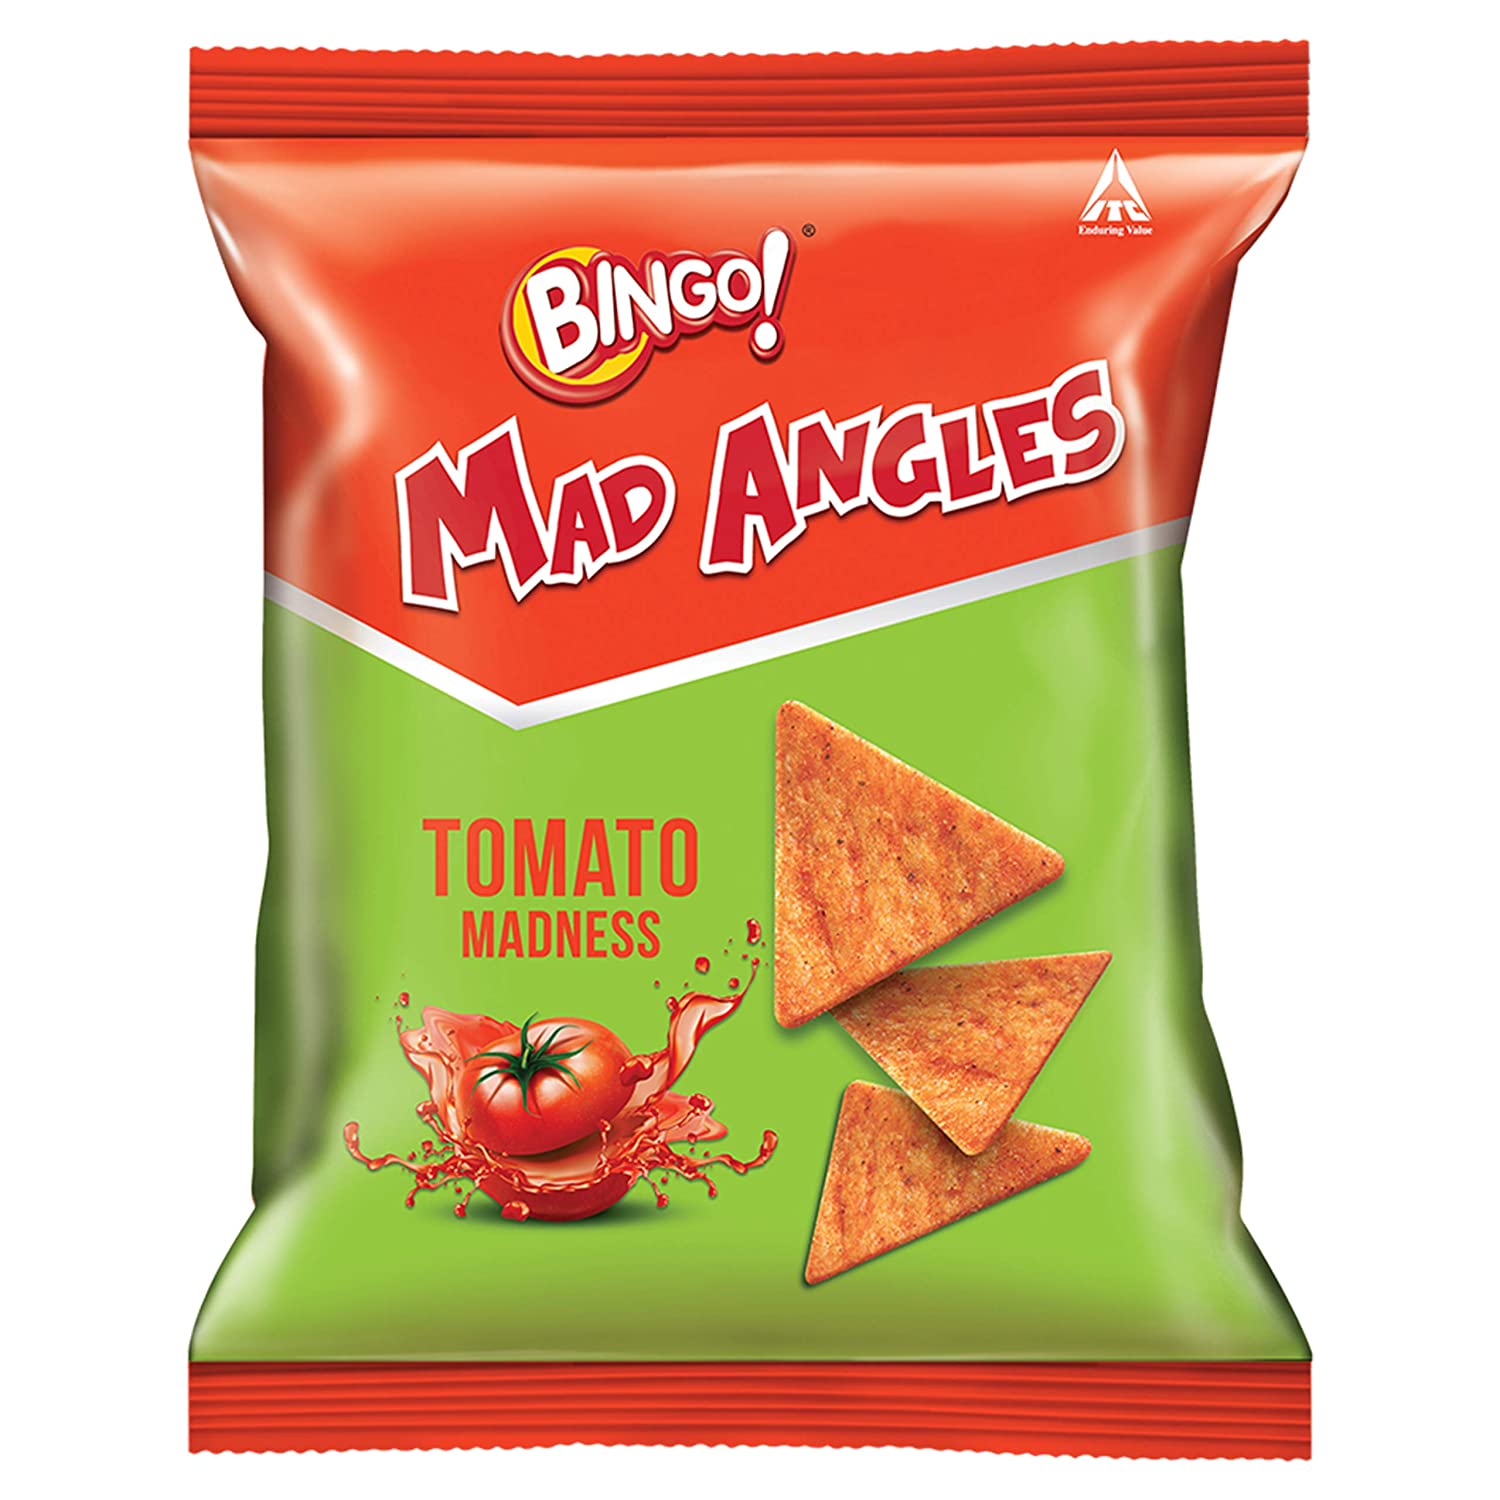 Bingo Mad Angles Tomato Madness Namkeen, 36.5g